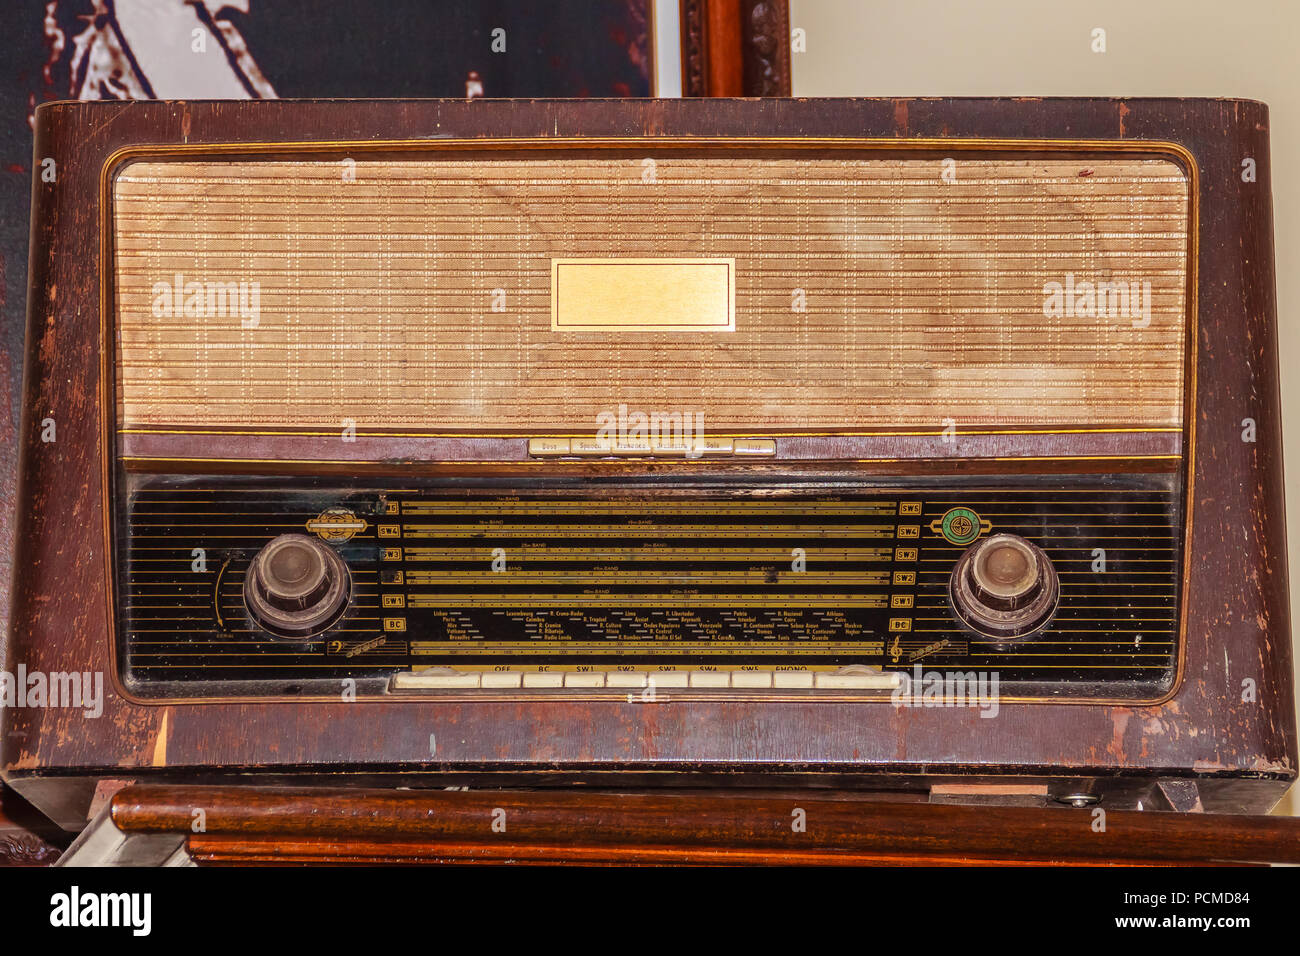 Zuidelijk kapok Lotsbestemming Old vintage FM radio receiver since world war II period Stock Photo - Alamy